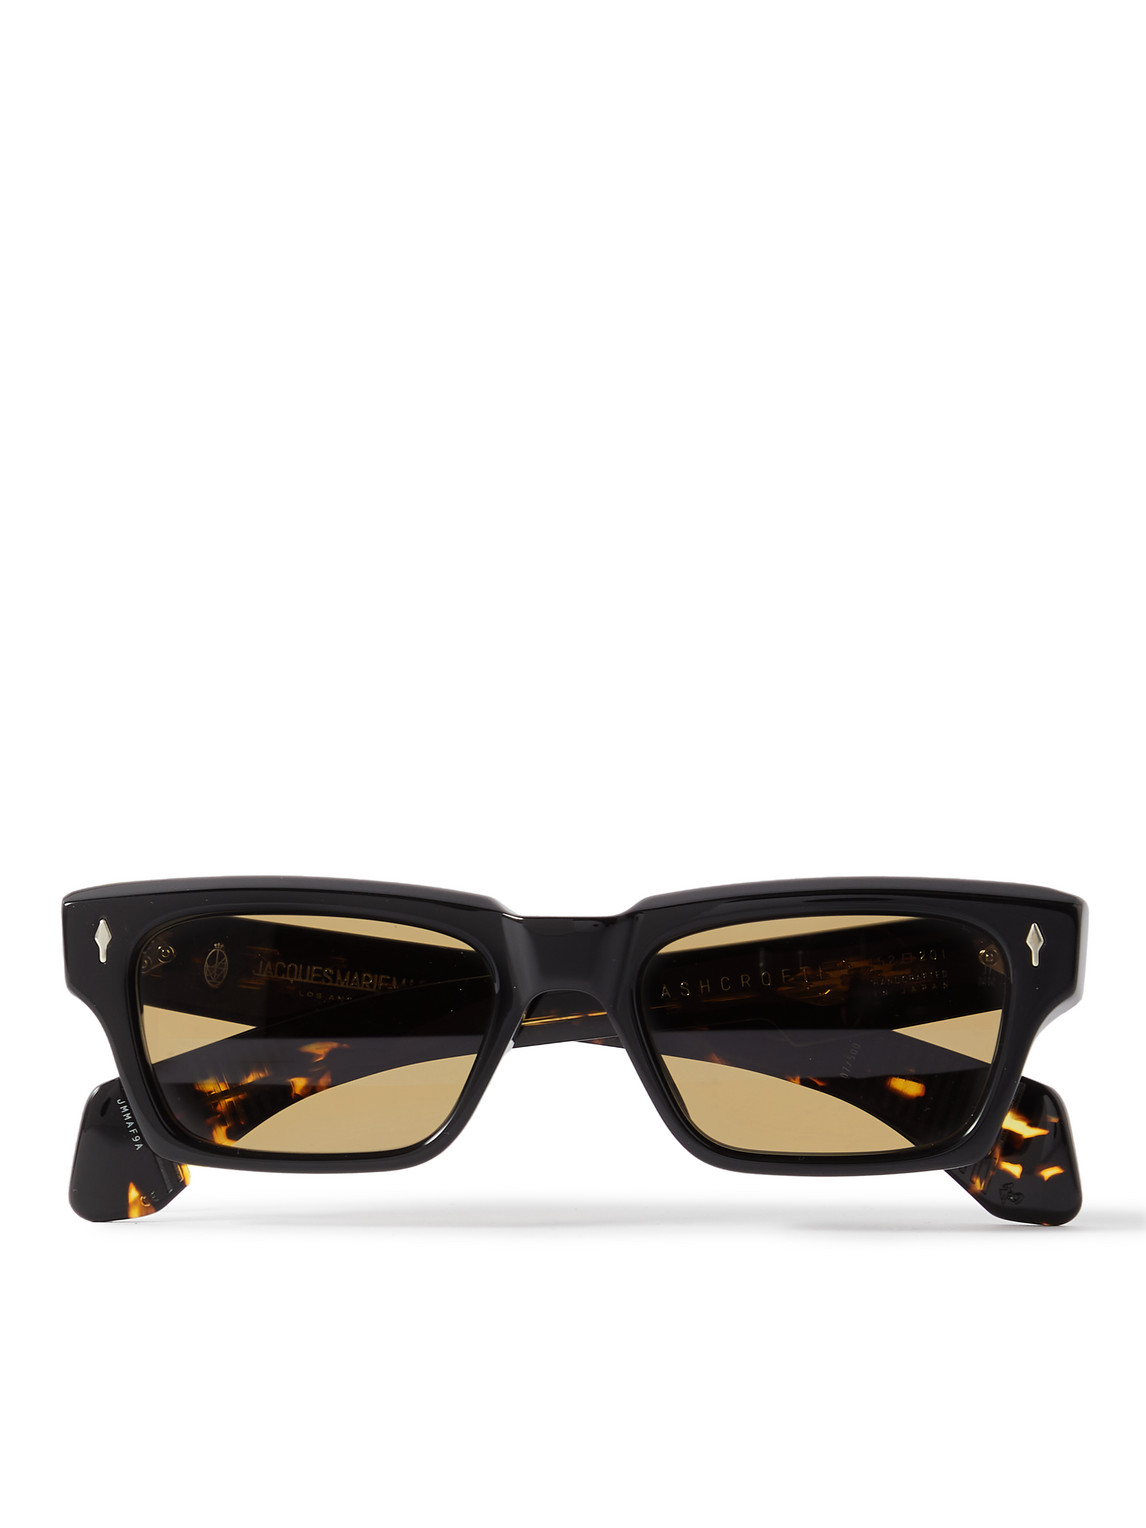 Jacques Marie Mage Ashcroft Rectangular-frame Tortoiseshell Acetate Sunglasses